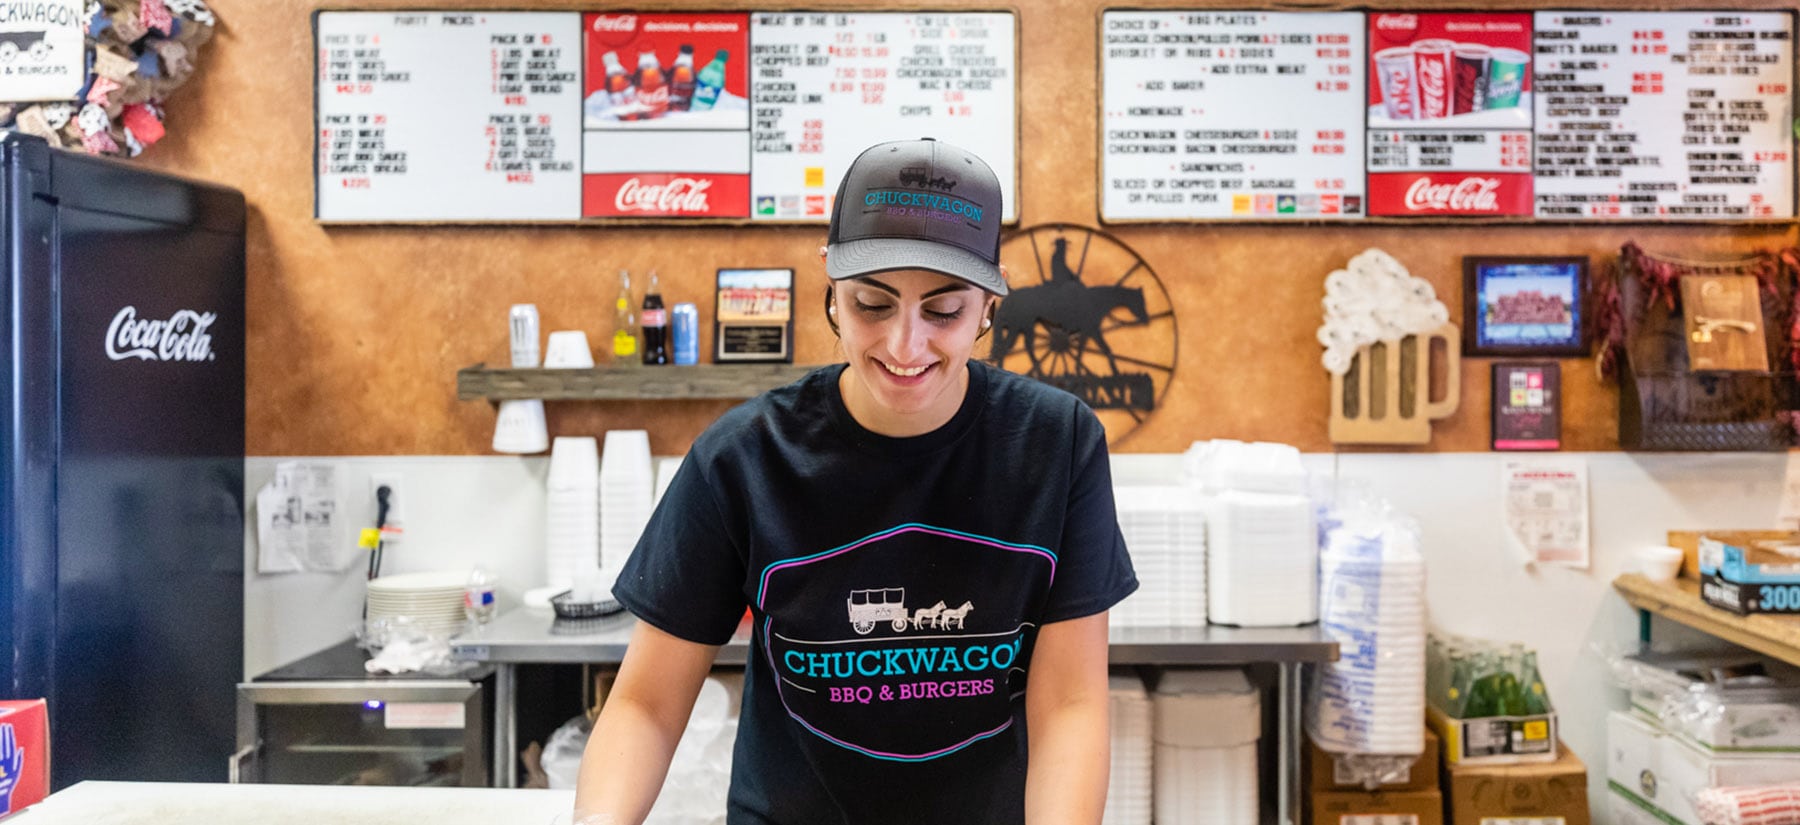 chuckwagon-bbq-and-burgers-employment